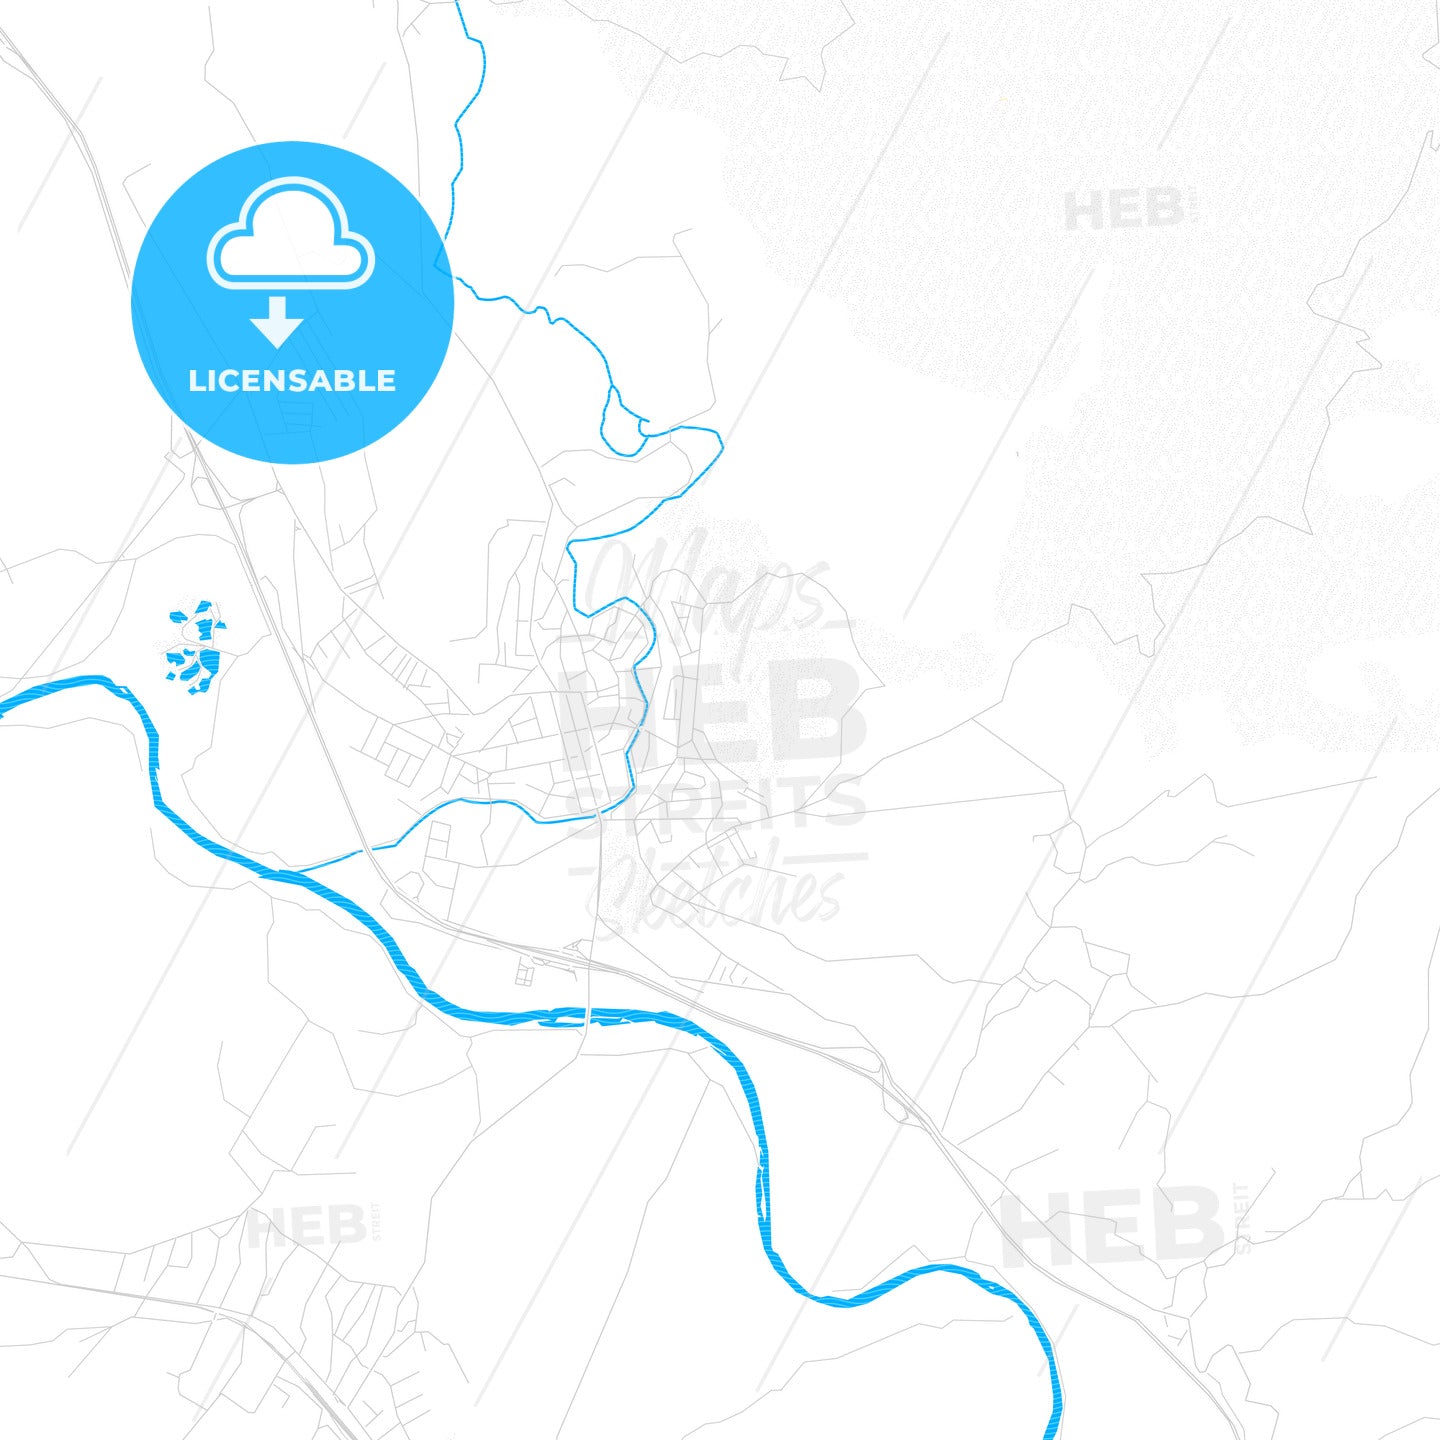 Aleksinac, Serbia PDF vector map with water in focus